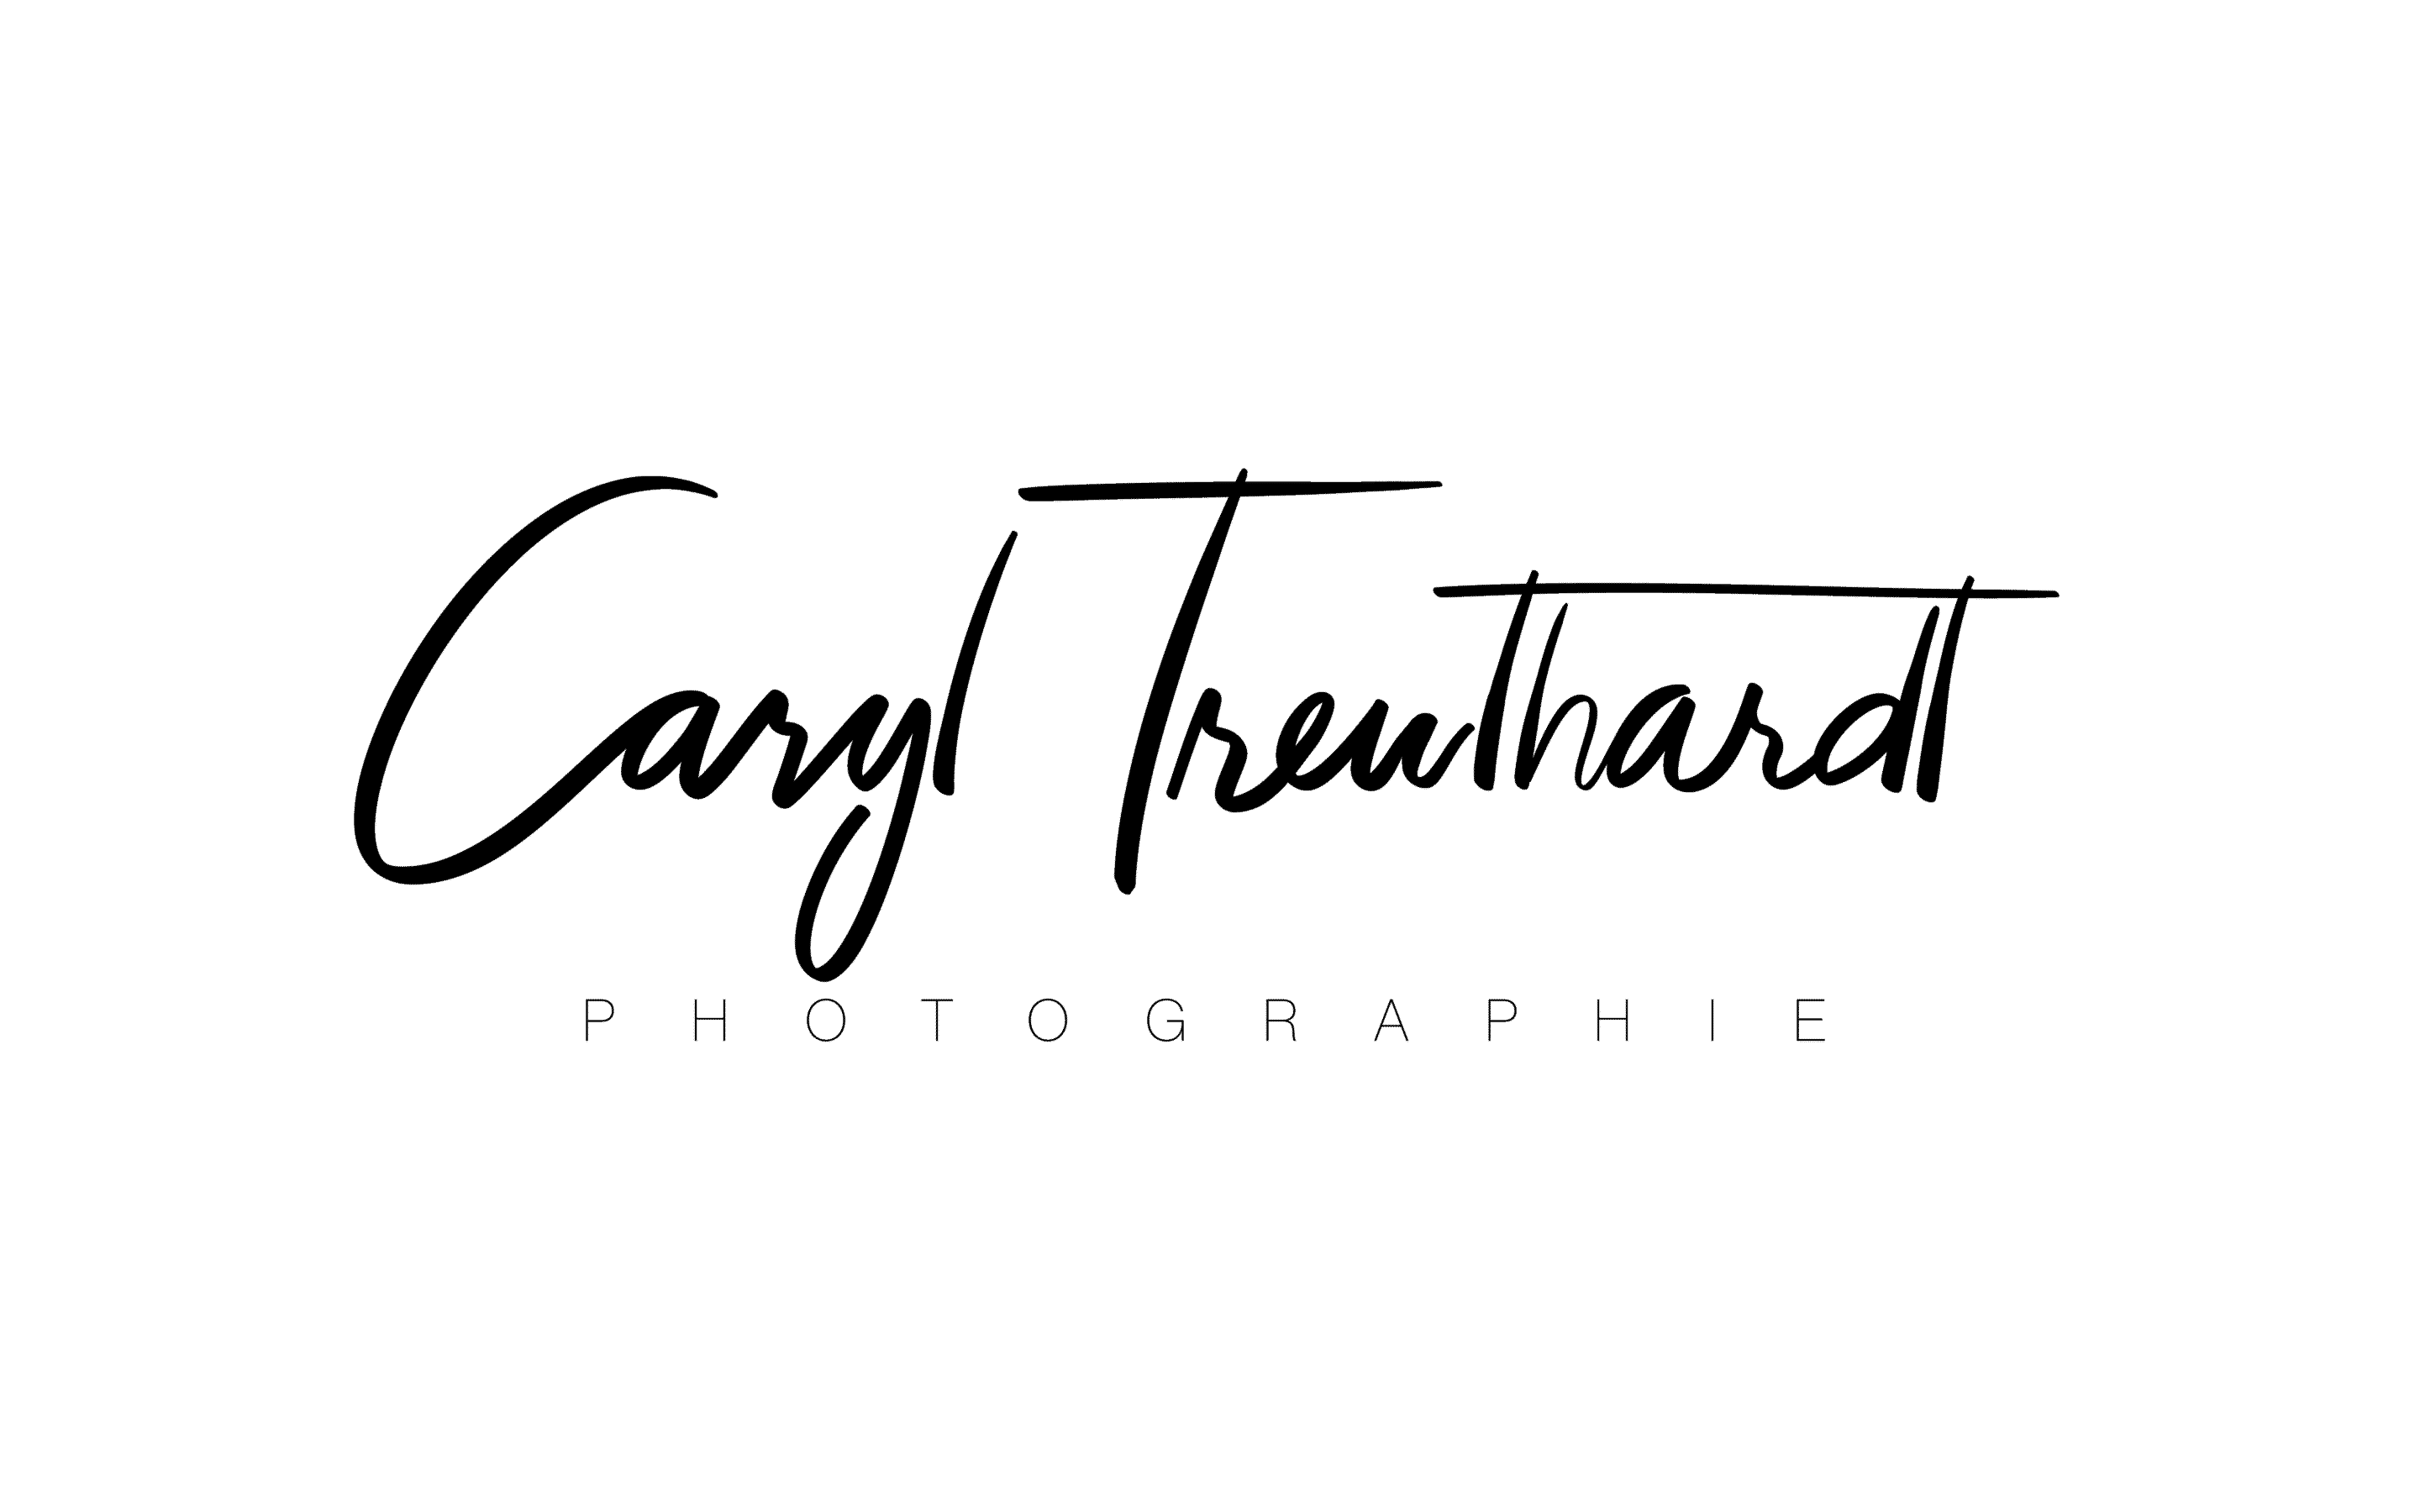 Caryl Treuthardt